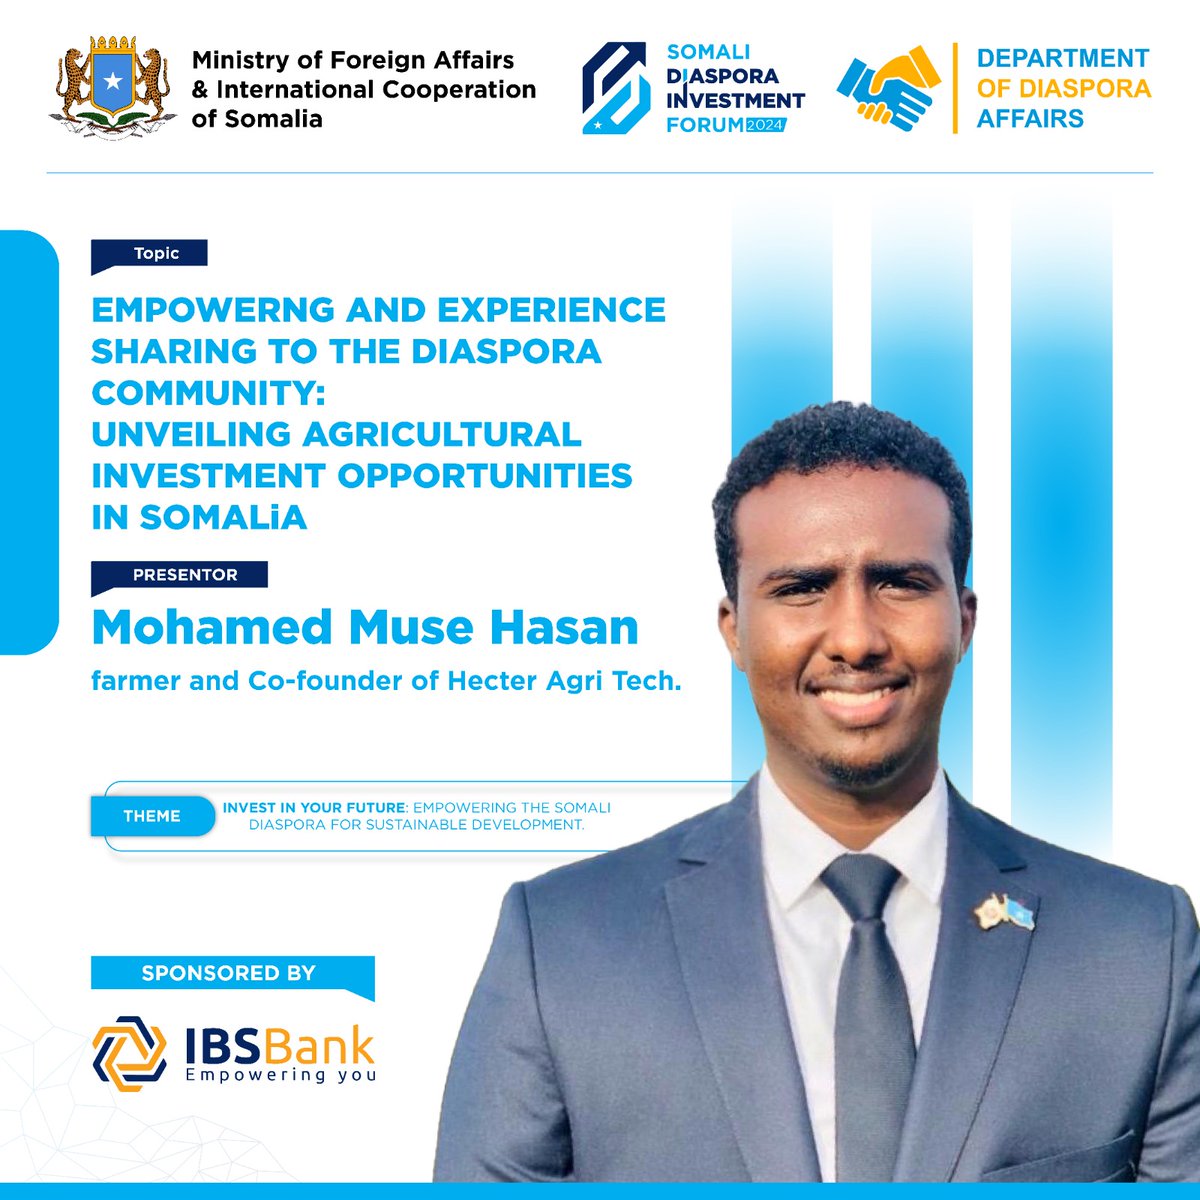 Mr. Mohamed Musse  Hassan s one of the presenters of Somalia Diaspora Investment Forum 2024. Which will be held in Mogadishu, Somalia. 

#SomaliDiaspora
#InvestInYourFuture
#SomaliaRising
#ANewdown4Somalia 
#SomaliDiasporaInvestmentForum